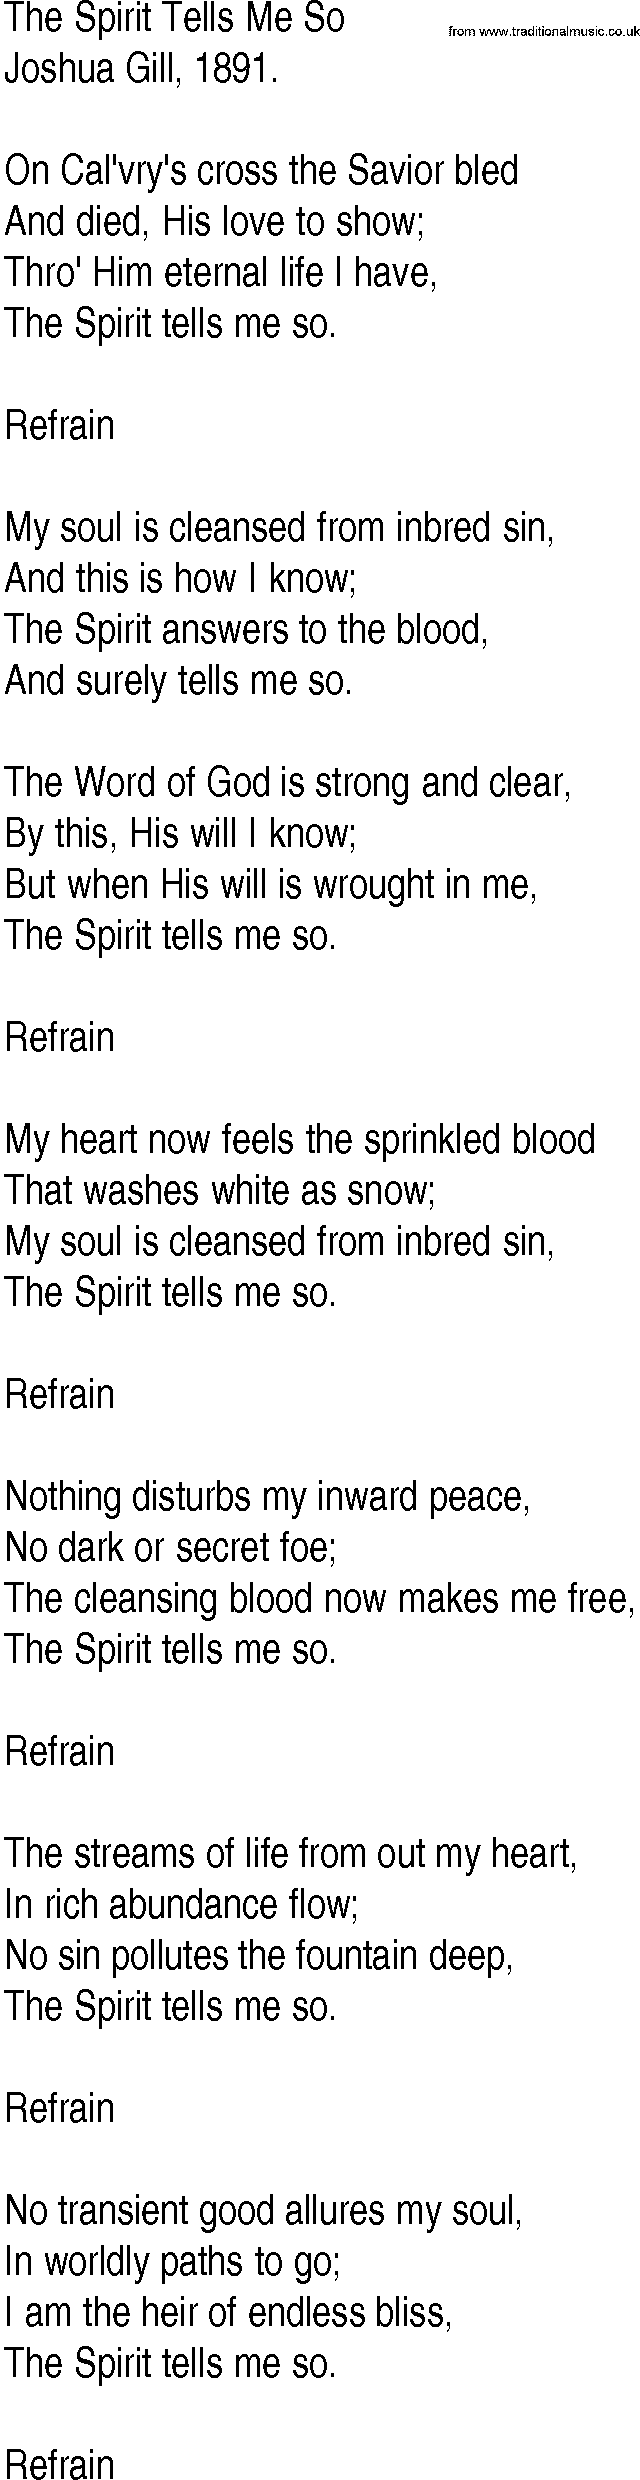 Hymn and Gospel Song: The Spirit Tells Me So by Joshua Gill lyrics